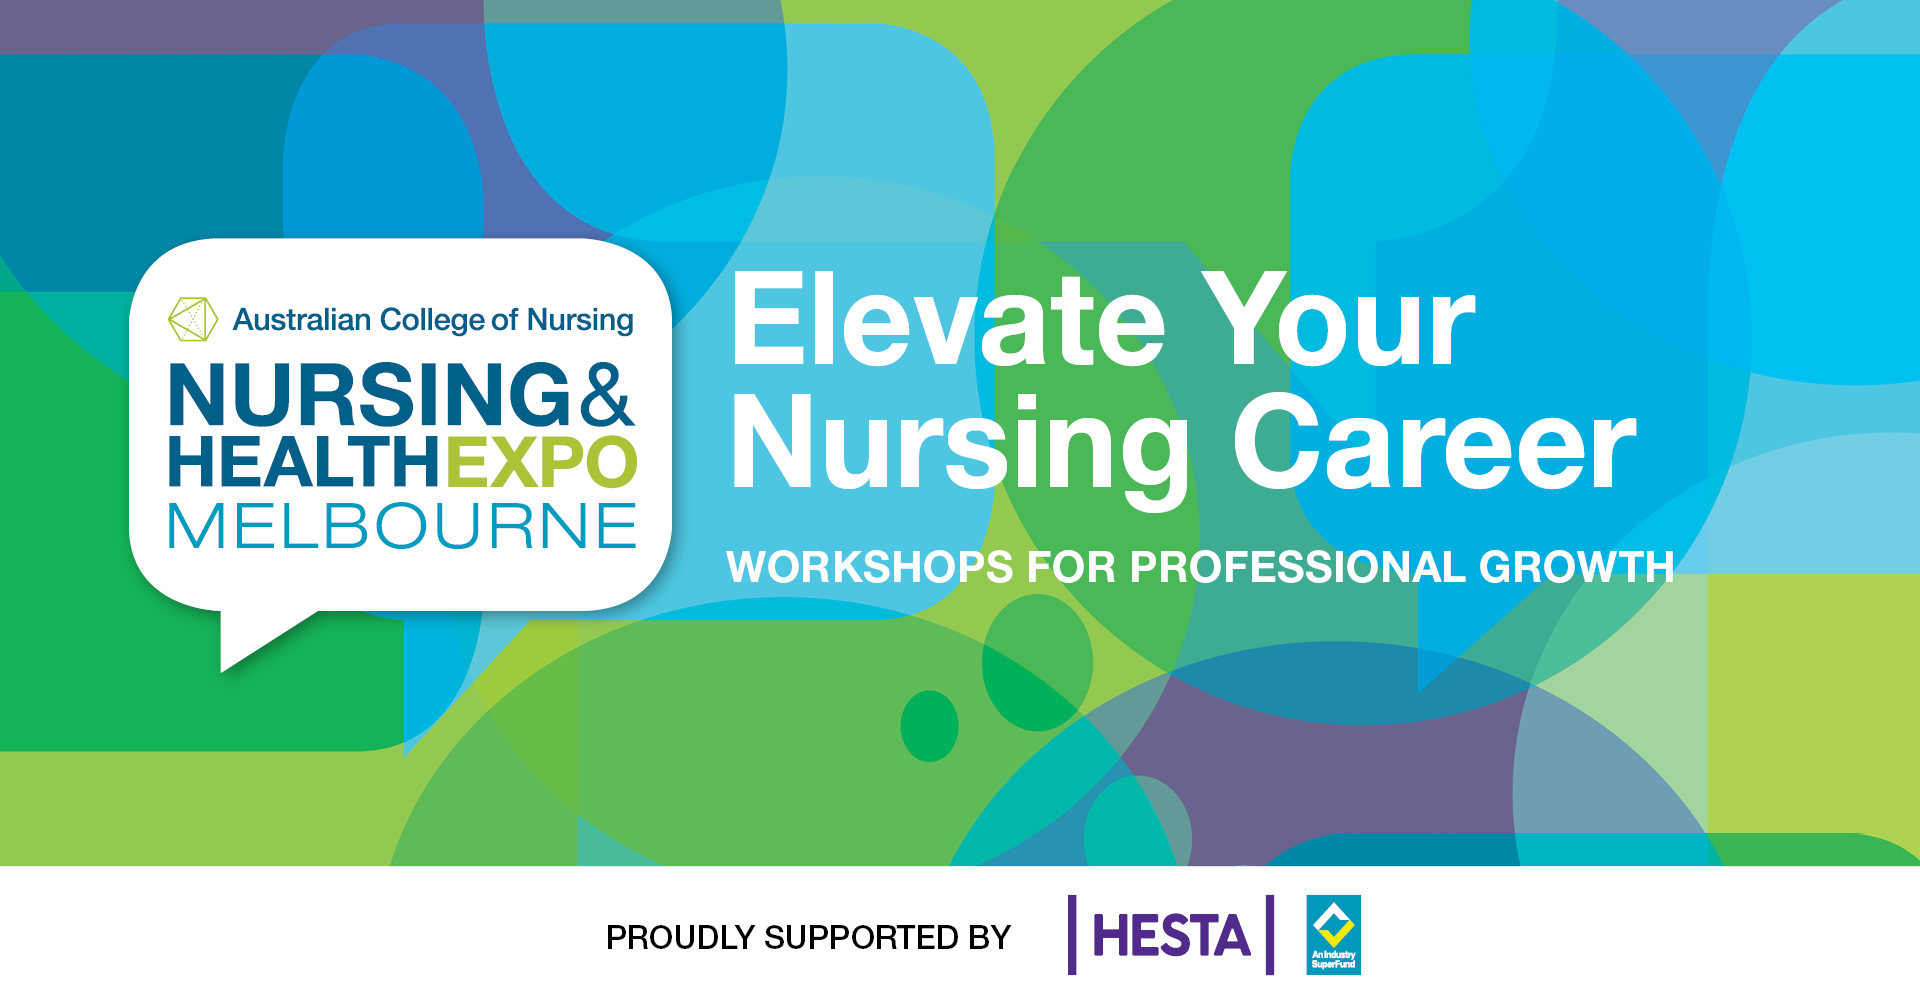 Nursing Education and Career Workshops